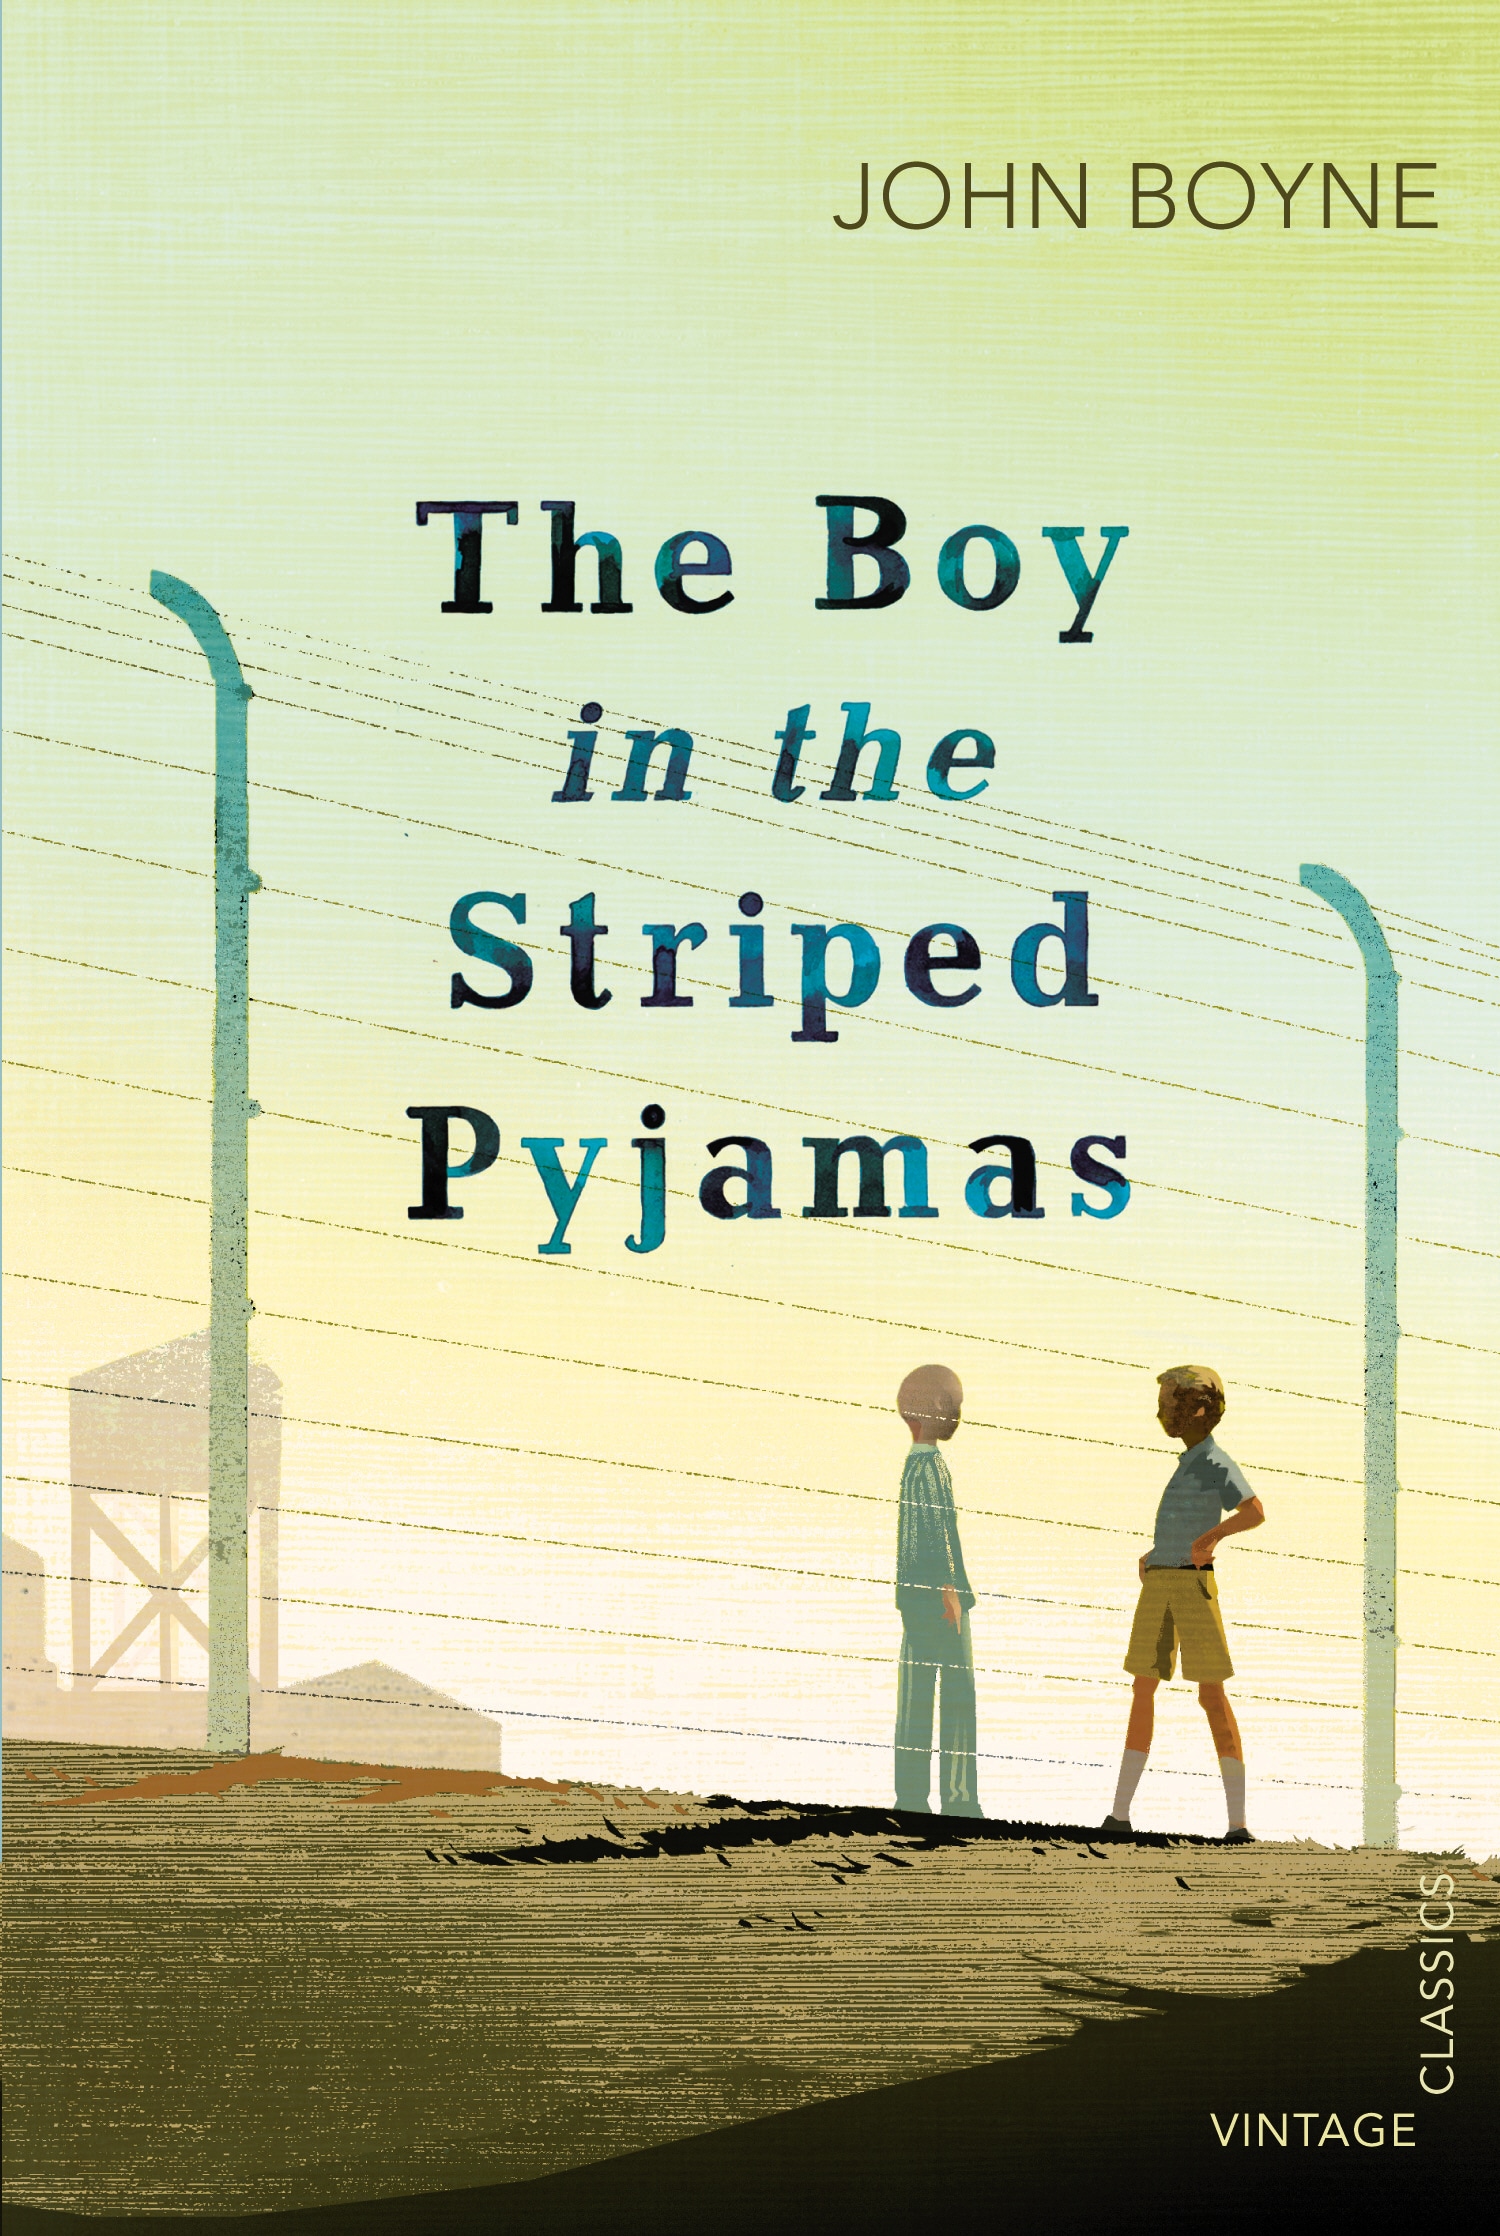 Book “The Boy in the Striped Pyjamas” by John Boyne — August 2, 2012